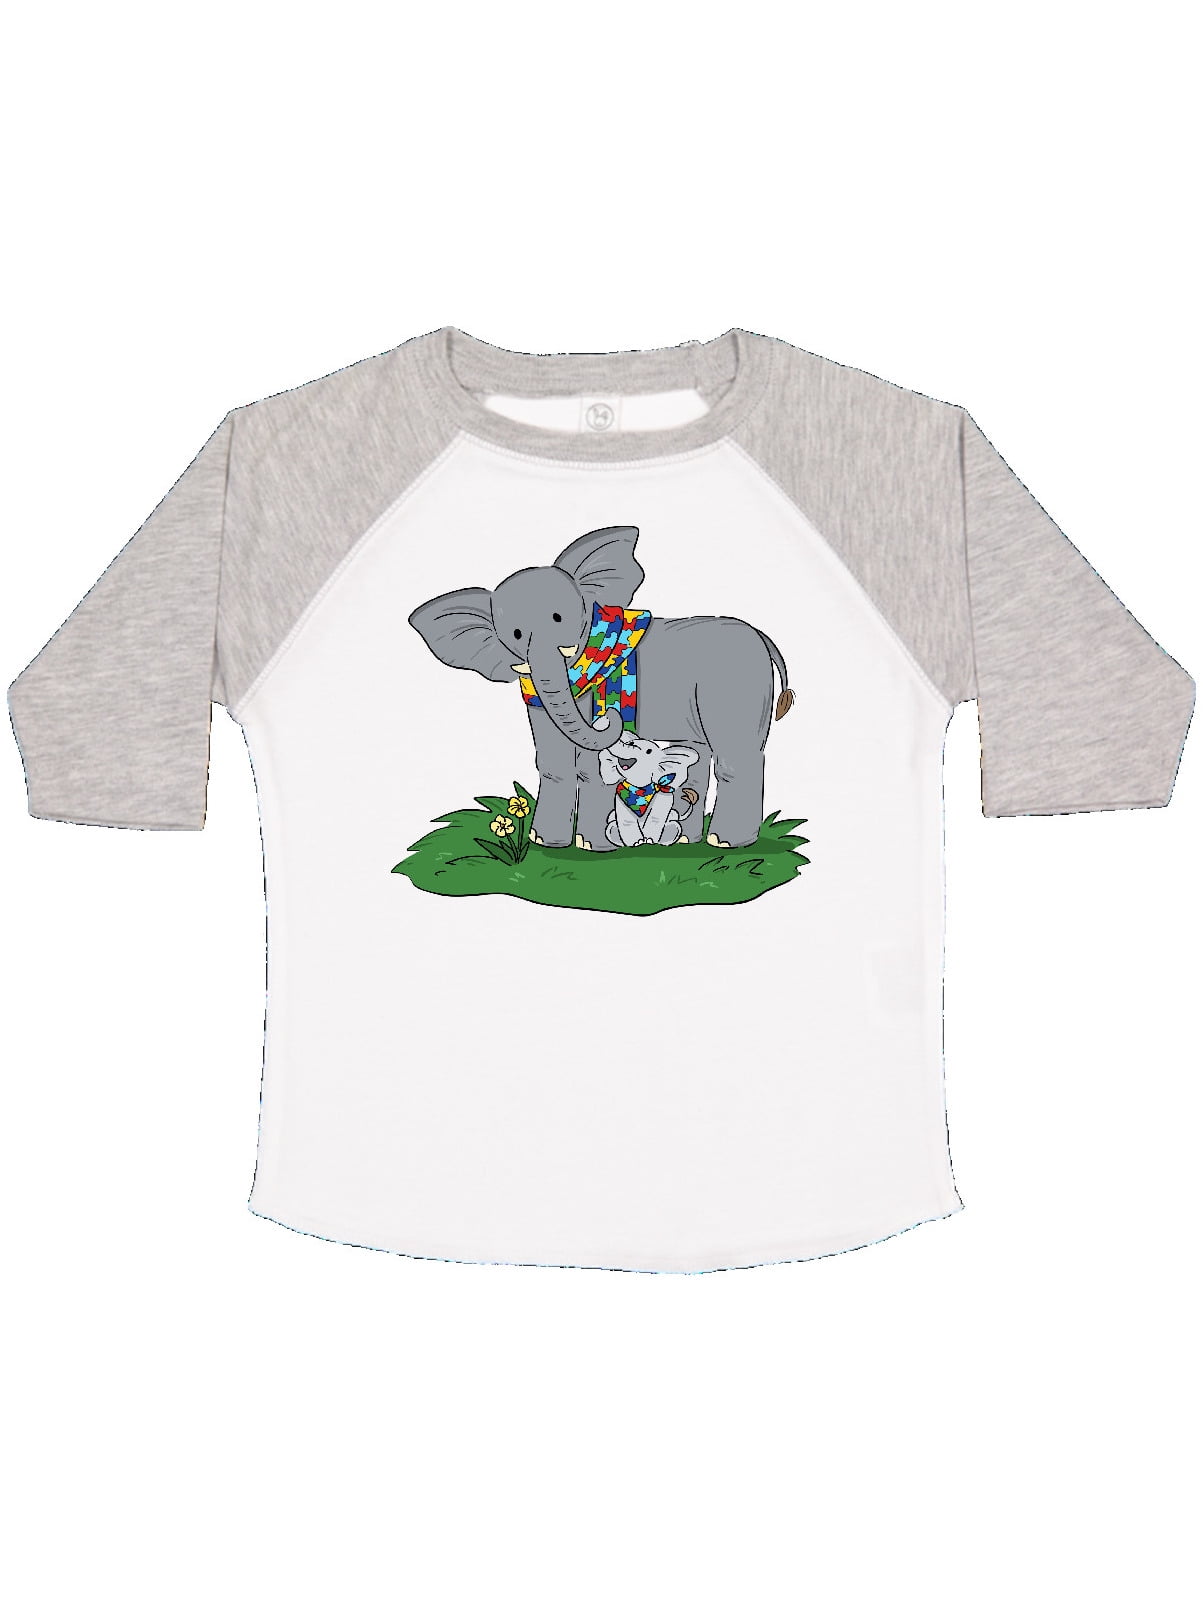 Autism Support Elephants Toddler T-Shirt - Walmart.com ...